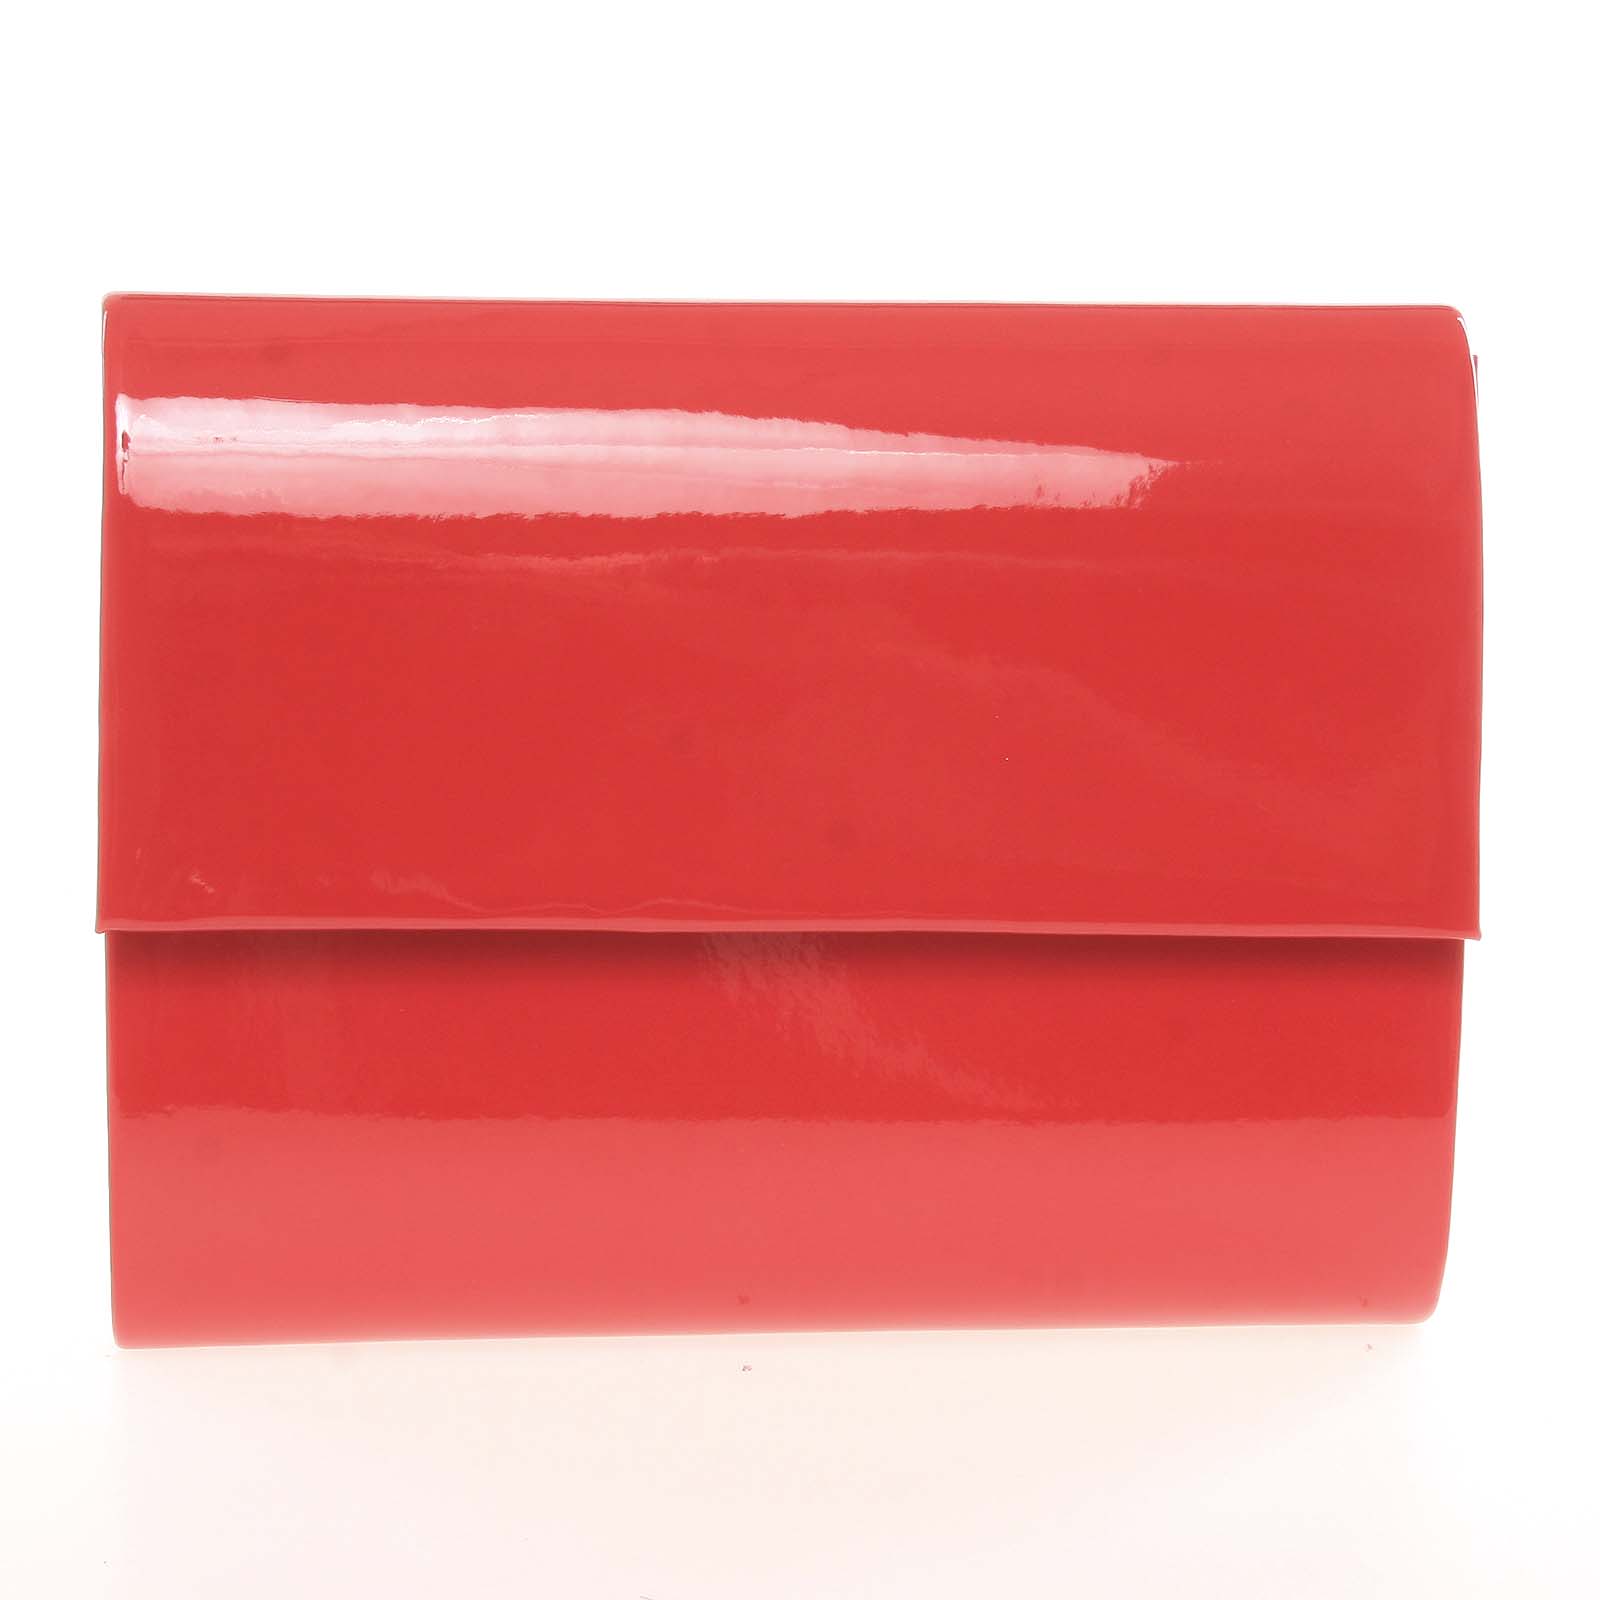 Stredná dámska elegantná listová kabelka červená lesklá - Delami Sandiego